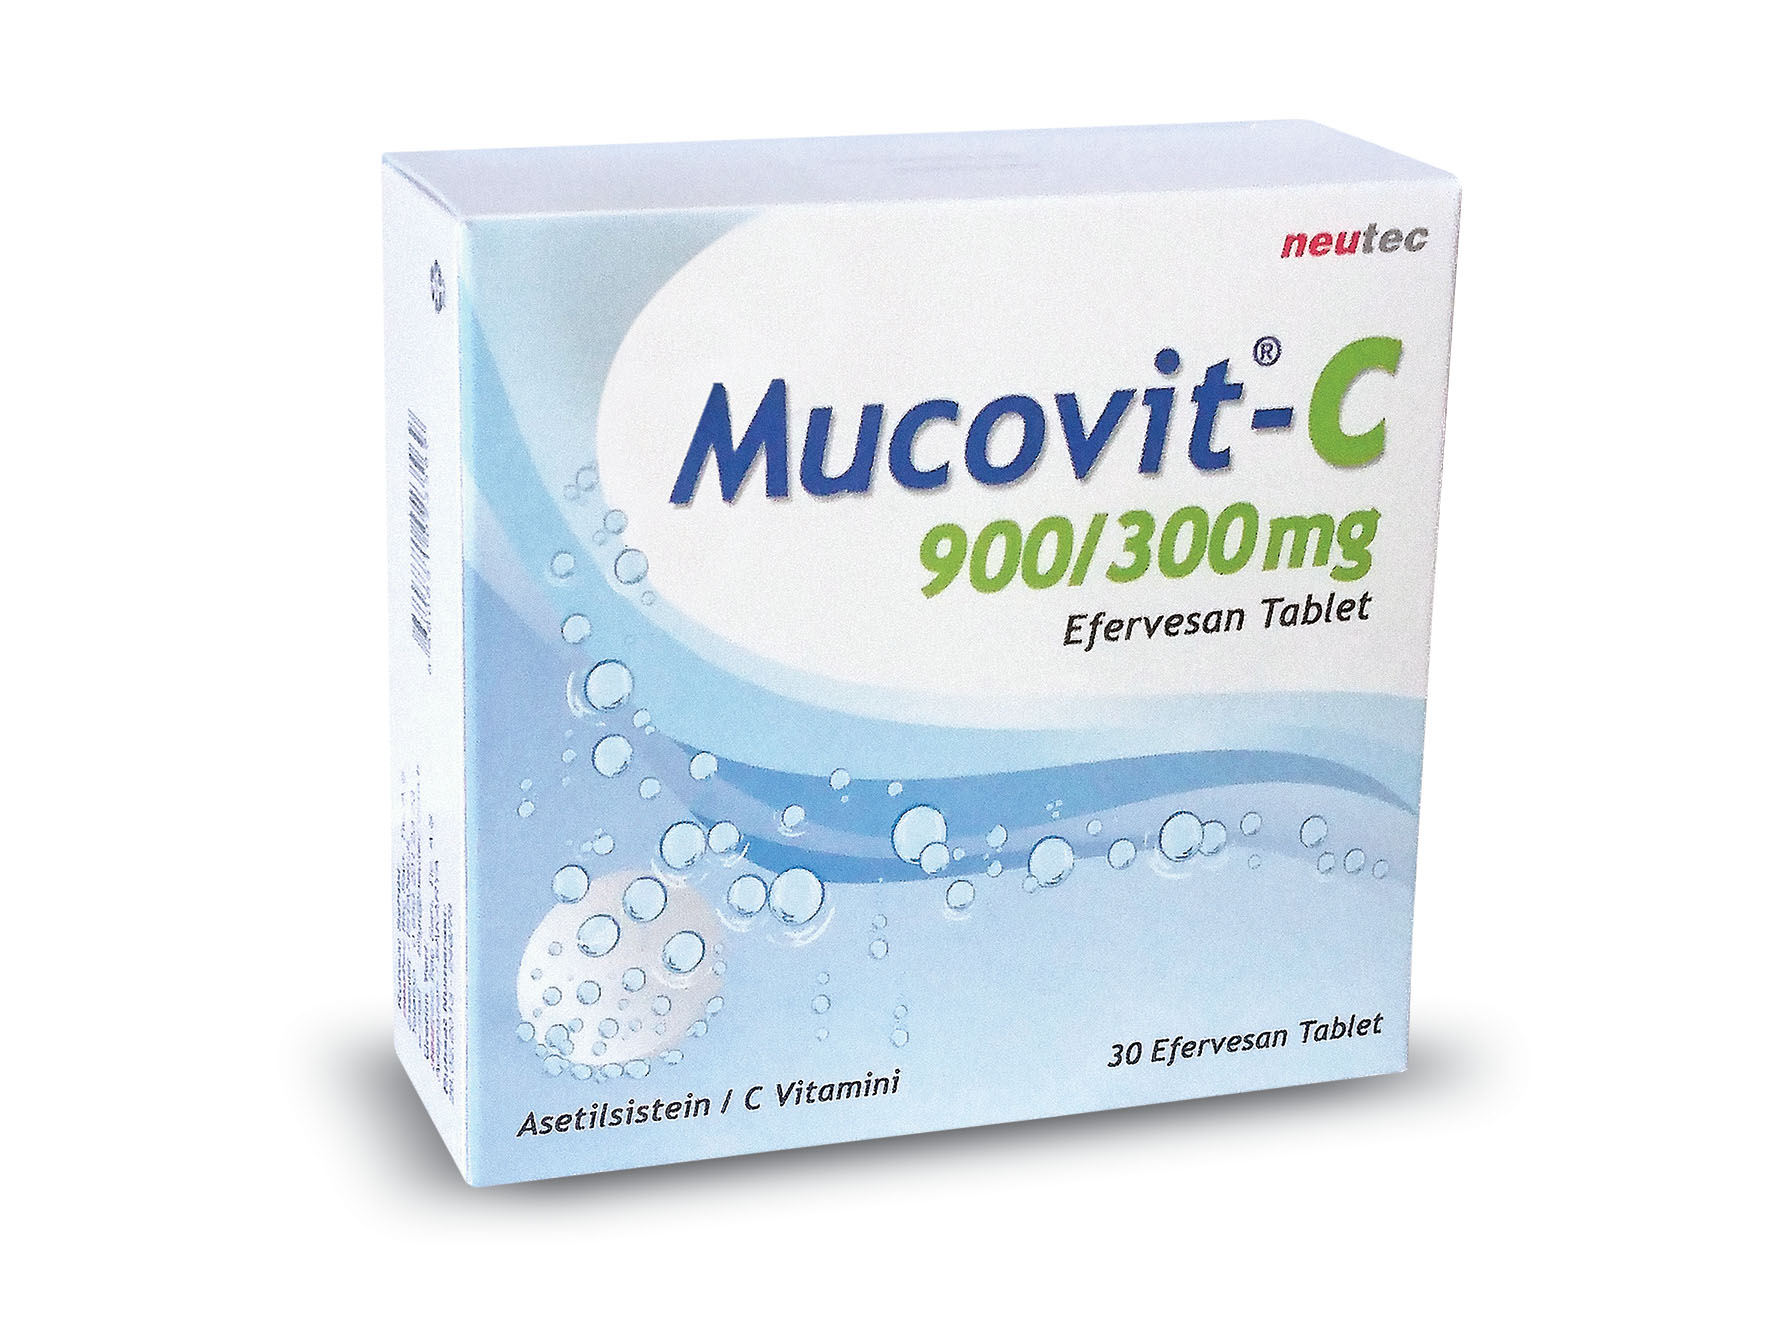 C 600 200. Mucovit-c 600/200 MG Efervesan Tablet. Турецкое лекарство Mucovit-c Efervesan Tablet. Mucovit-c 600/200 MG Efervesan Tablet (30 Efervesan Tablet). Турецкая лекарство NAC 600mg Efervesan Tablet.